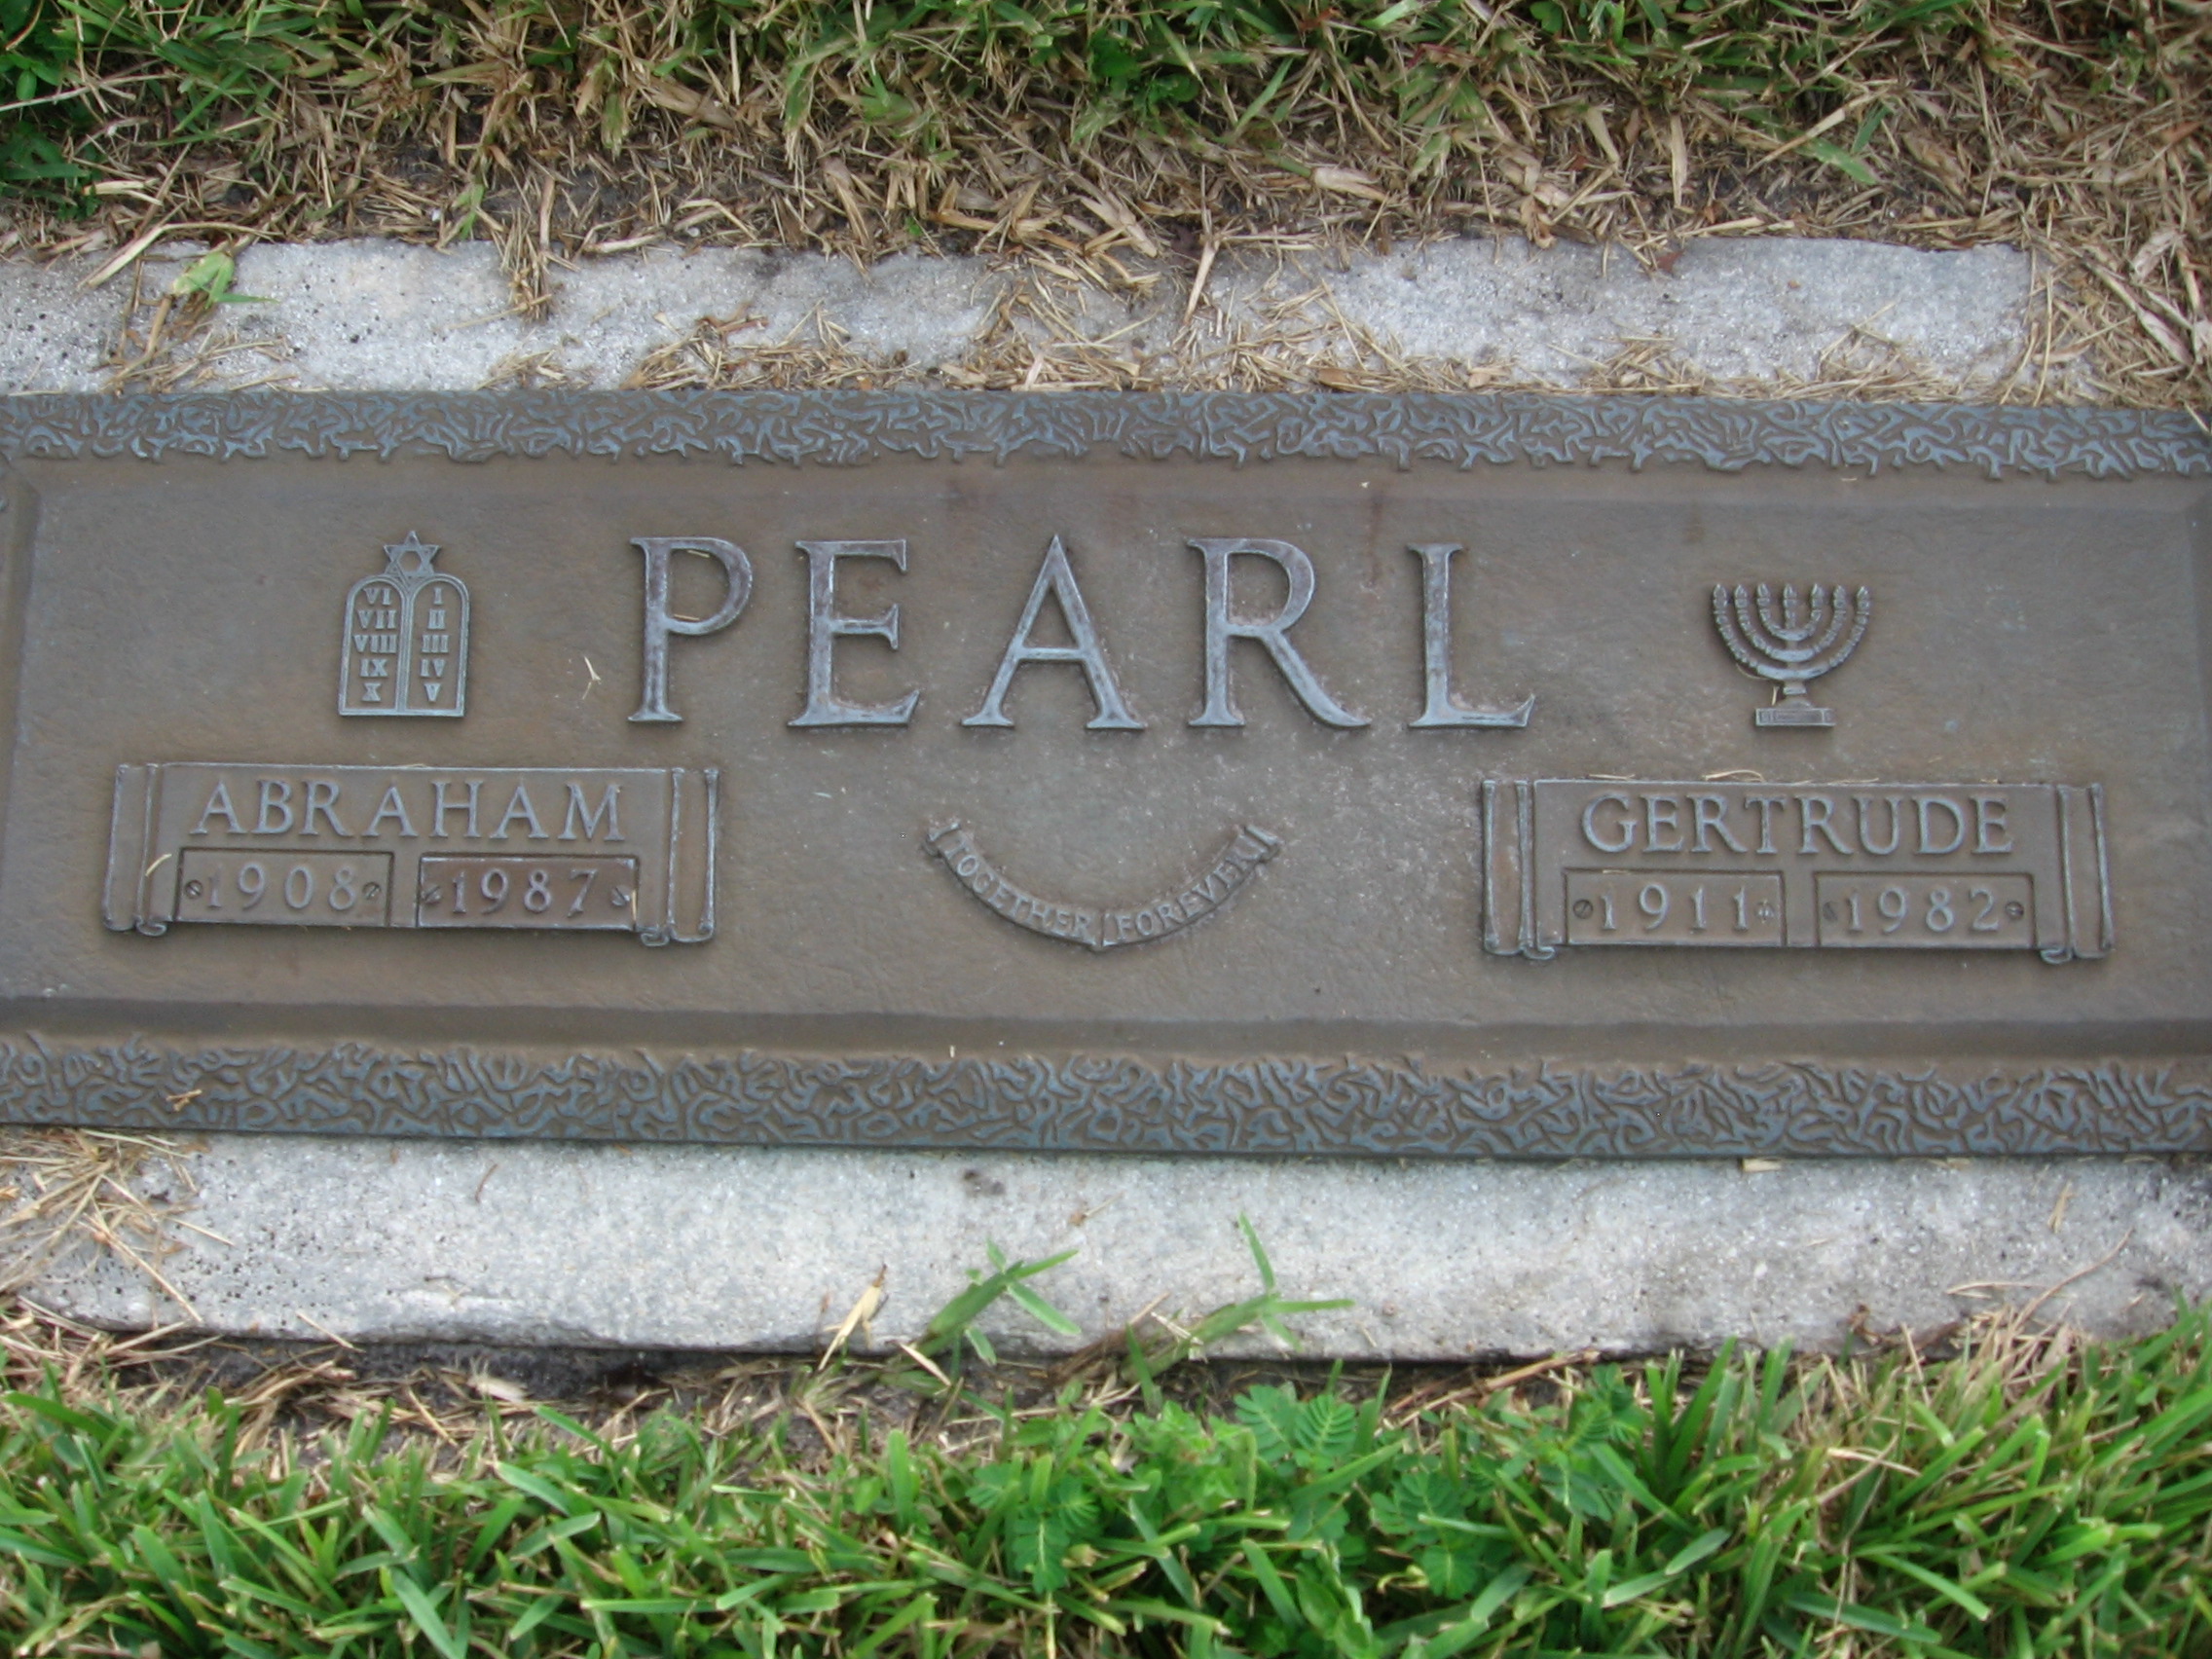 Abraham Pearl